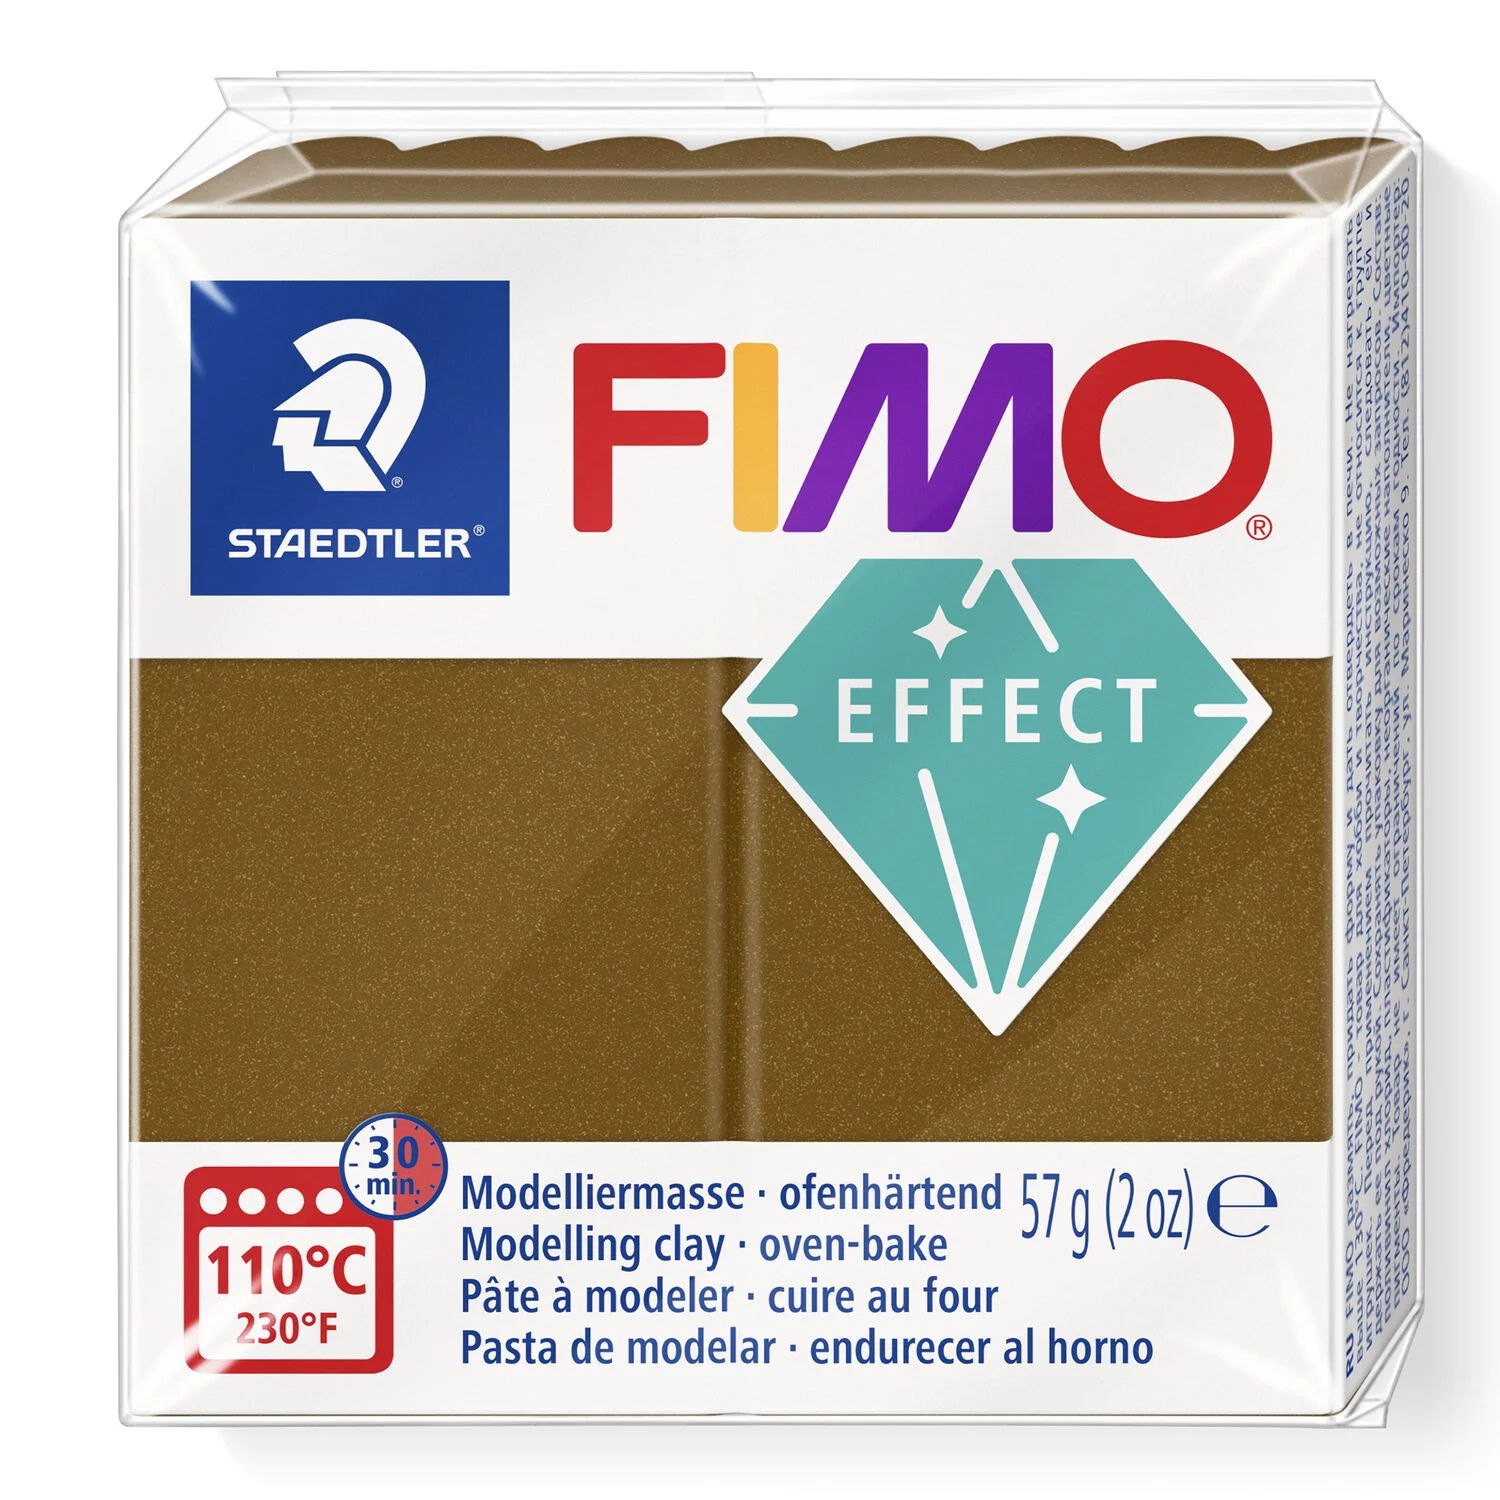 STAEDTLER 8010-71 - Fimo effect Metallic ofenhärtende Modelliermasse, 57g, antikbronze metallic